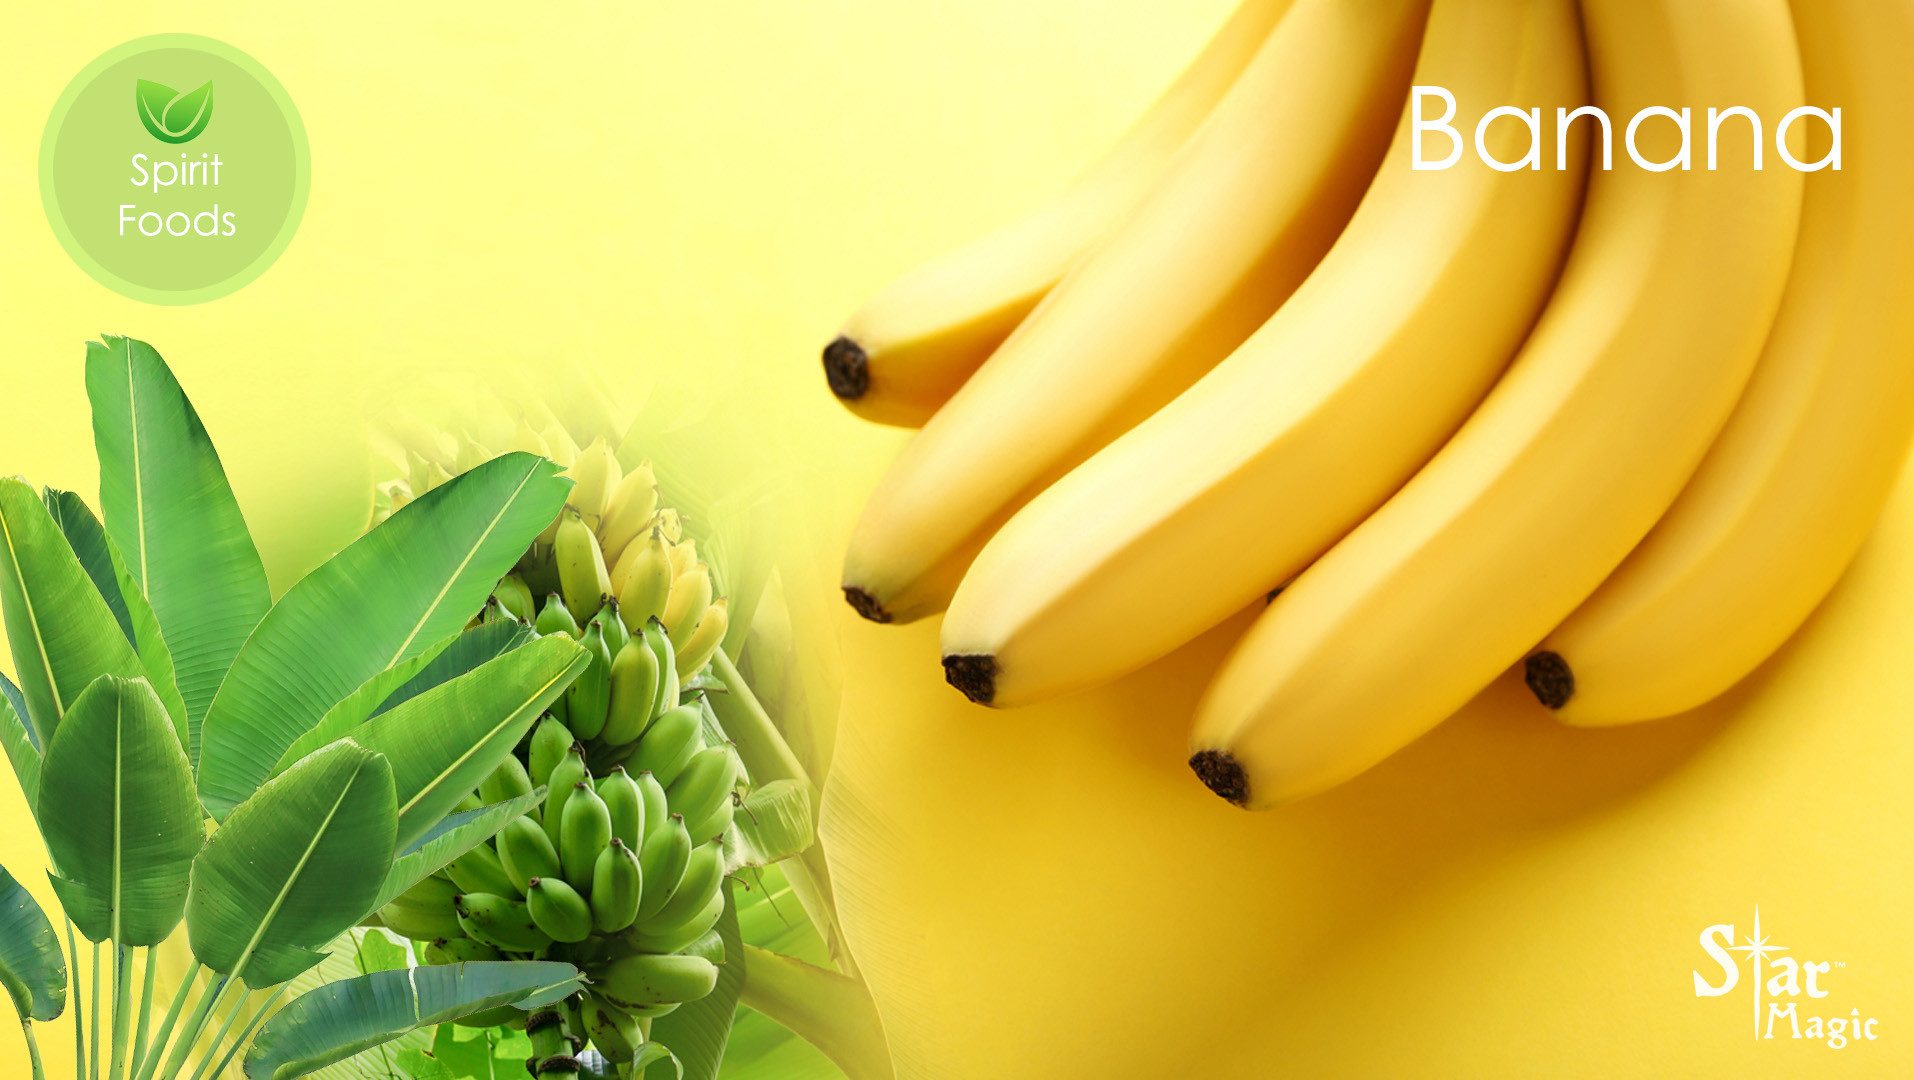 Spirit Food - benefits of banana